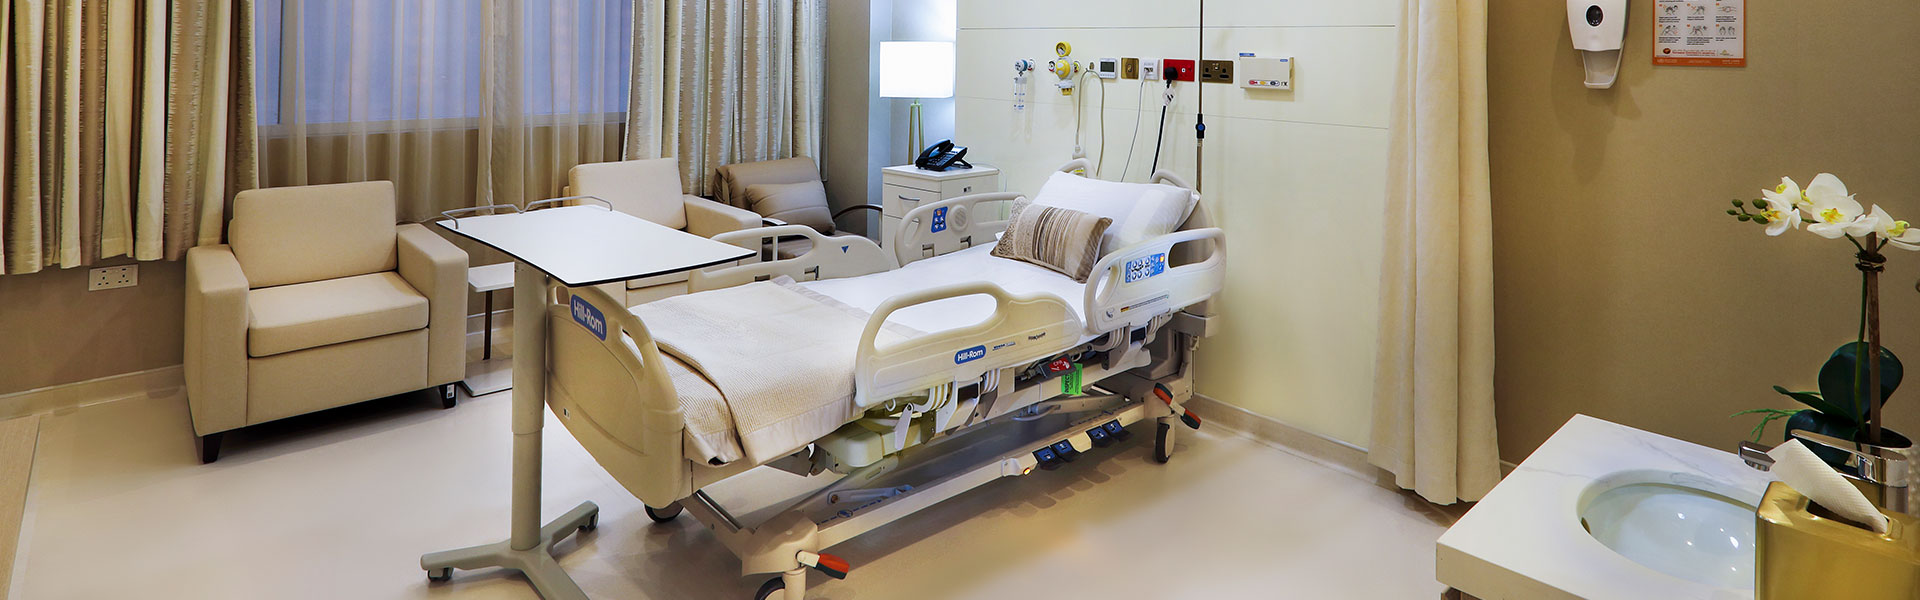 350 Bedded Academic Hospital in UAE